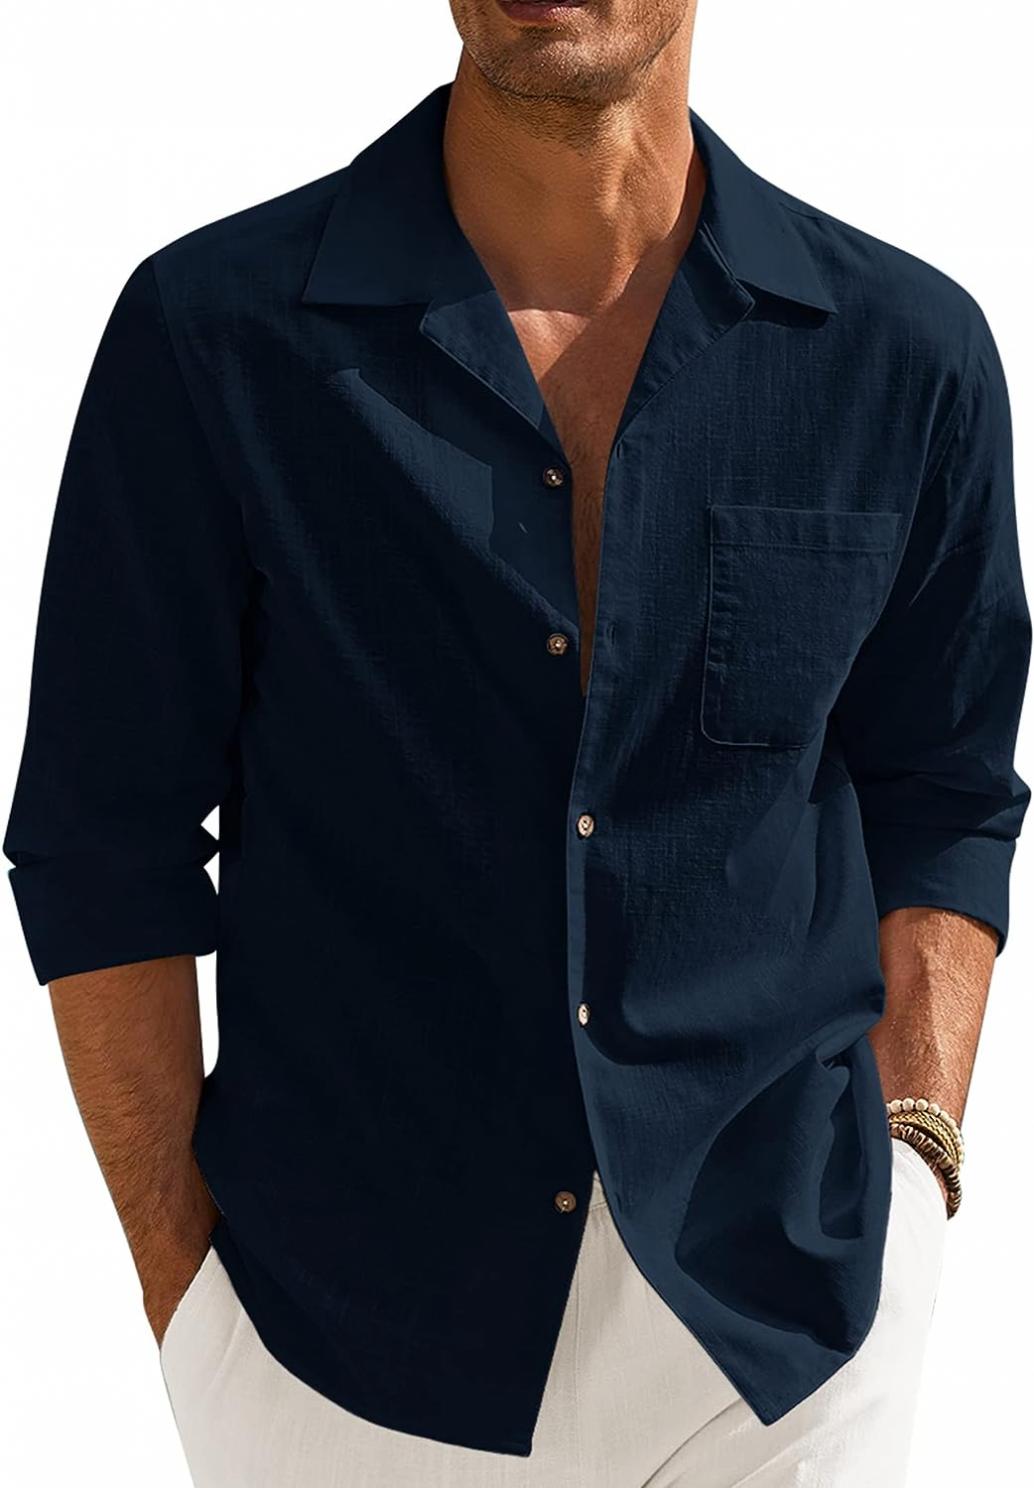 COOFANDY Men's Cotton Linen Shirts Long Sleeve Casual Buttton Down Shirts Beach Top